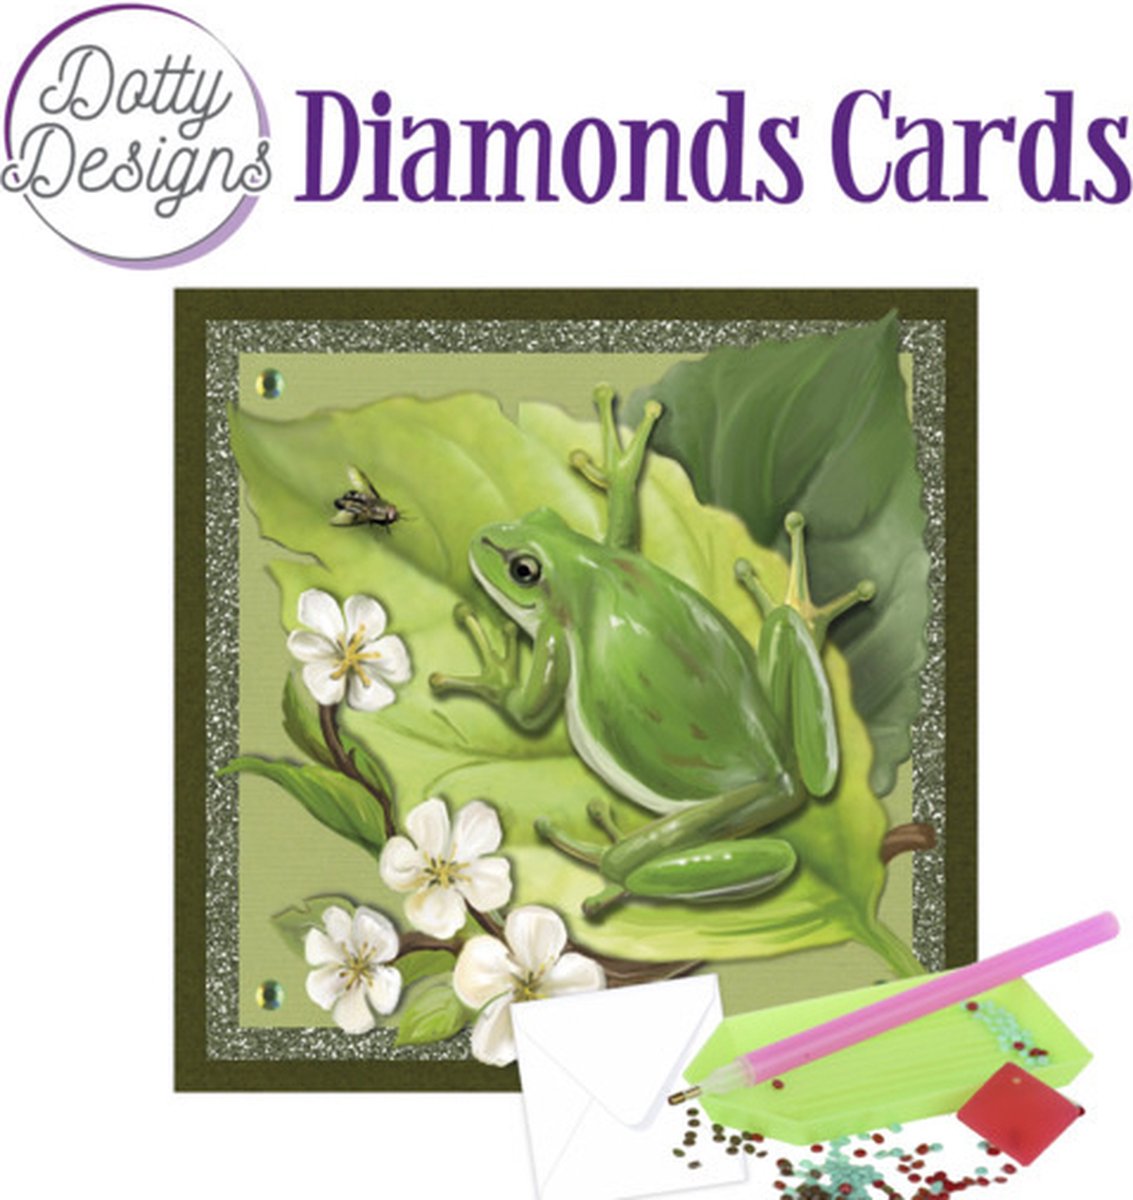 Dotty Designs Diamond Cards Frog